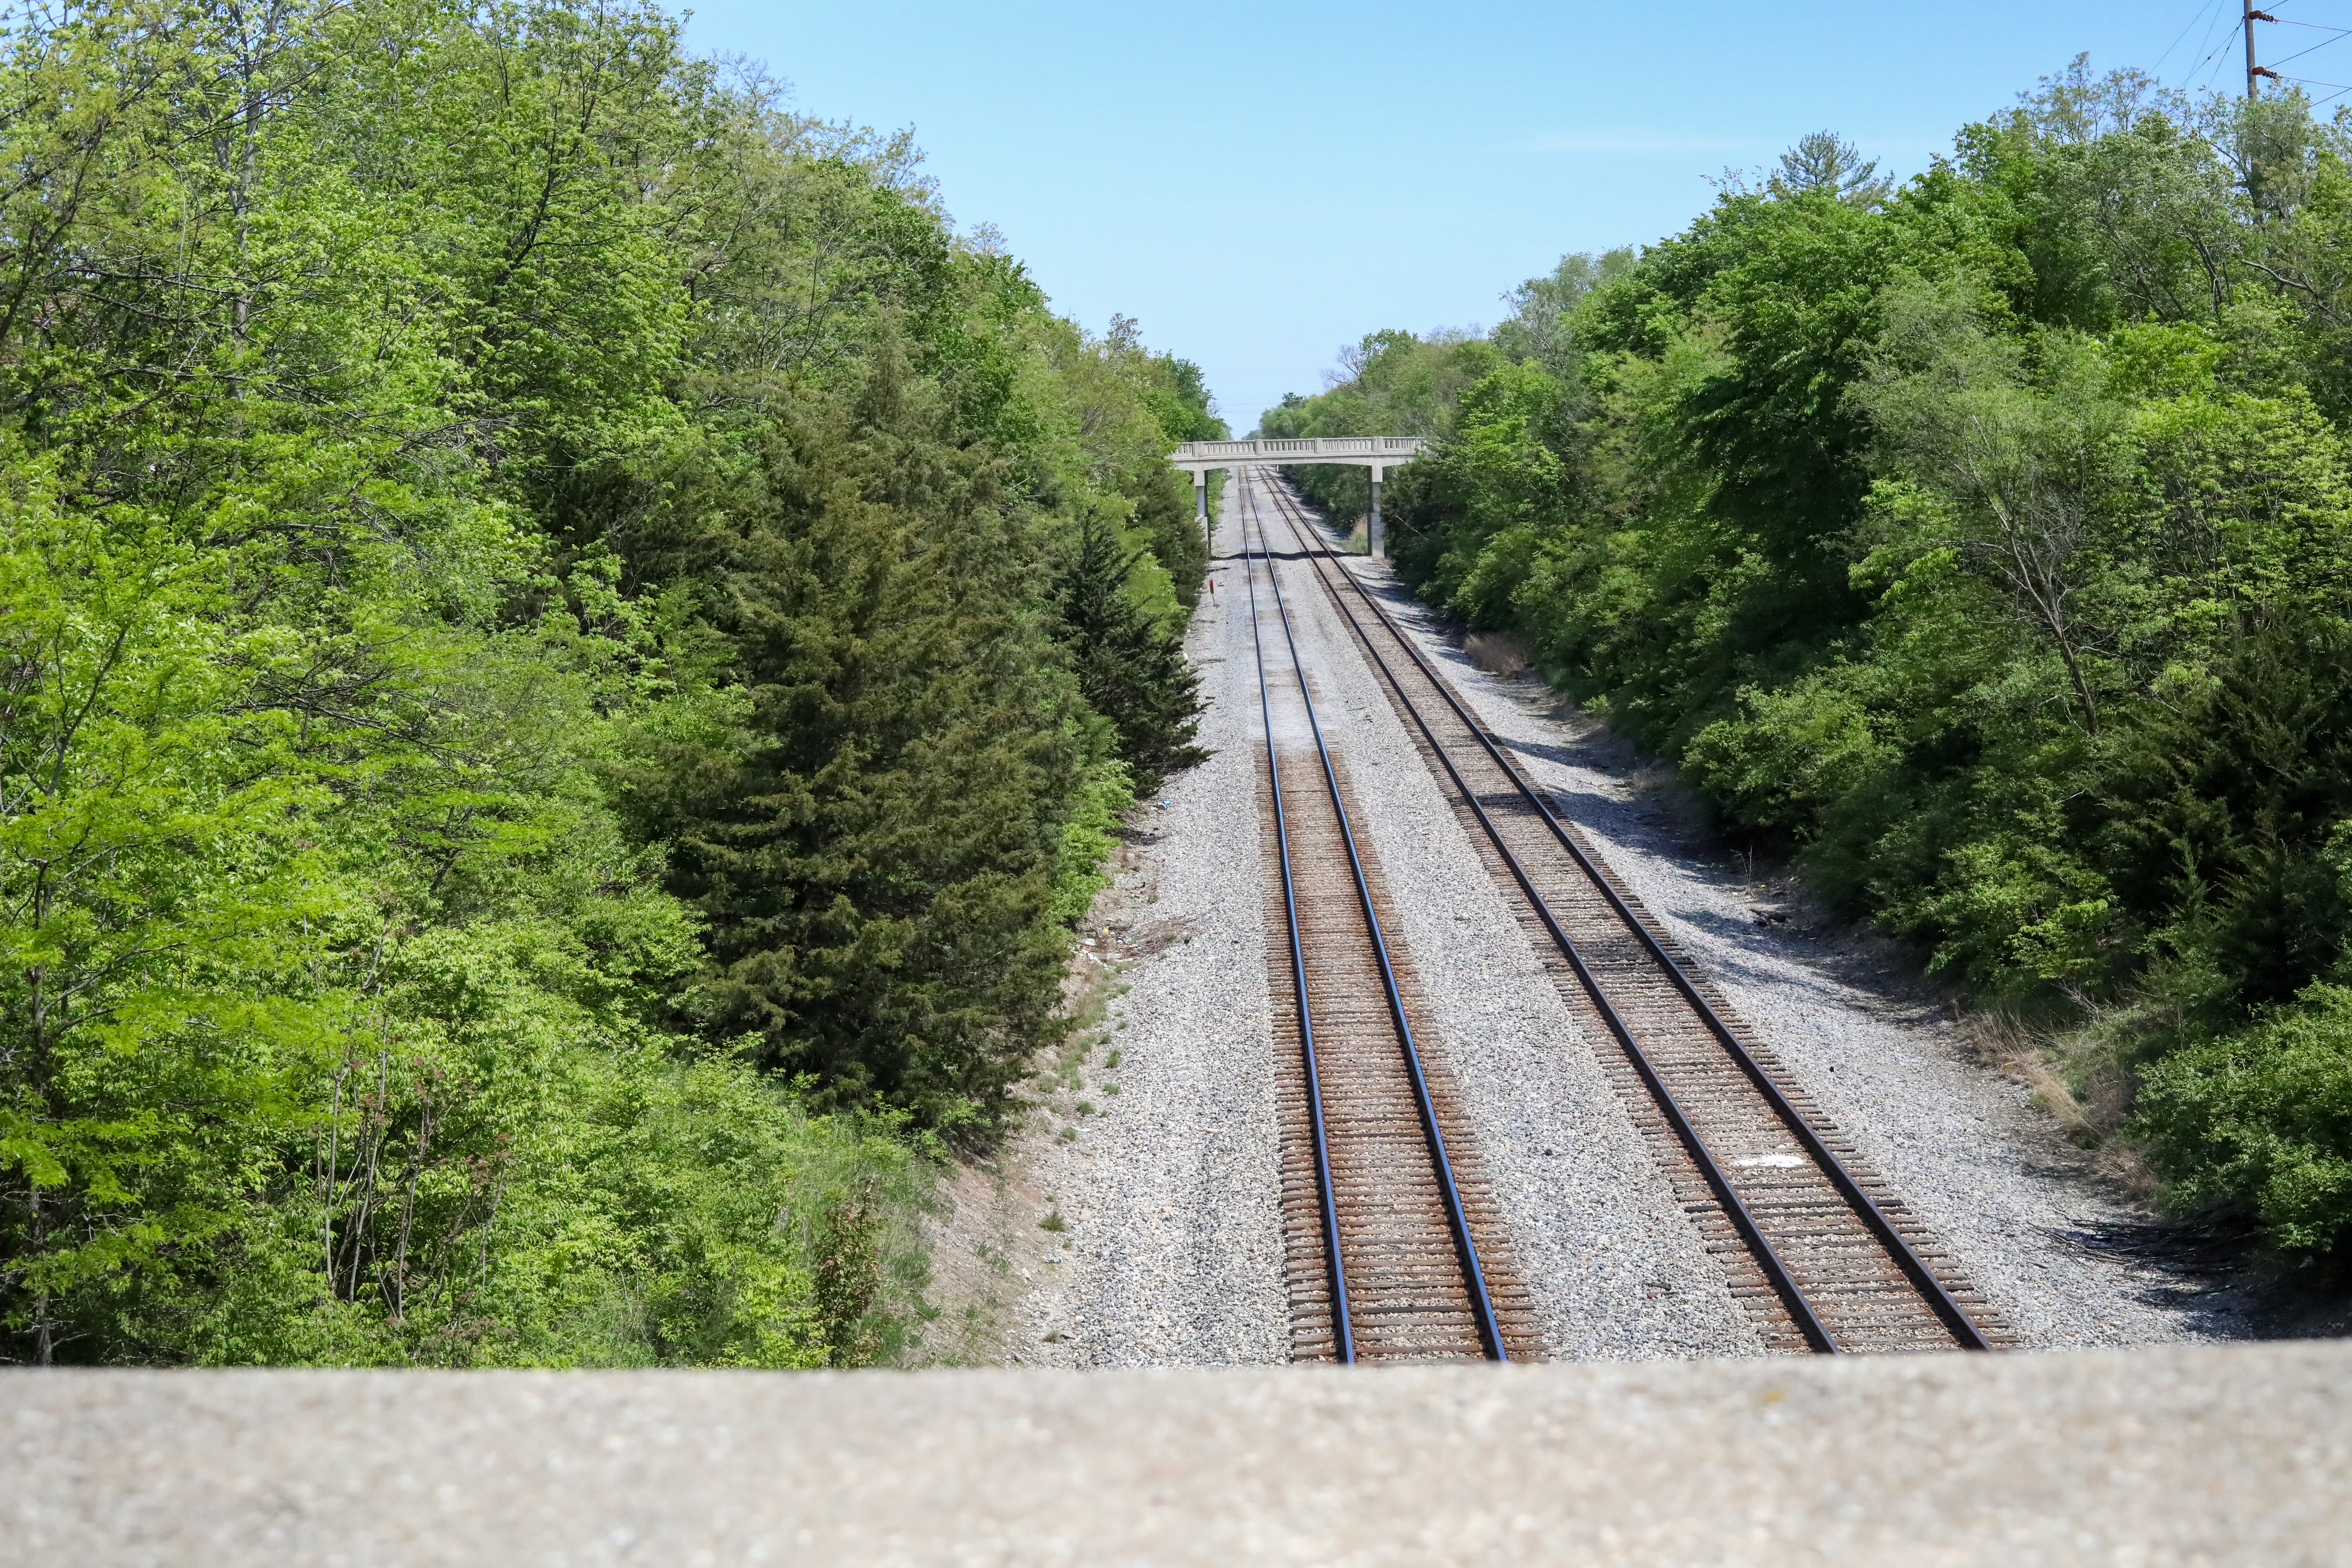 2 railroad tracks going through trees